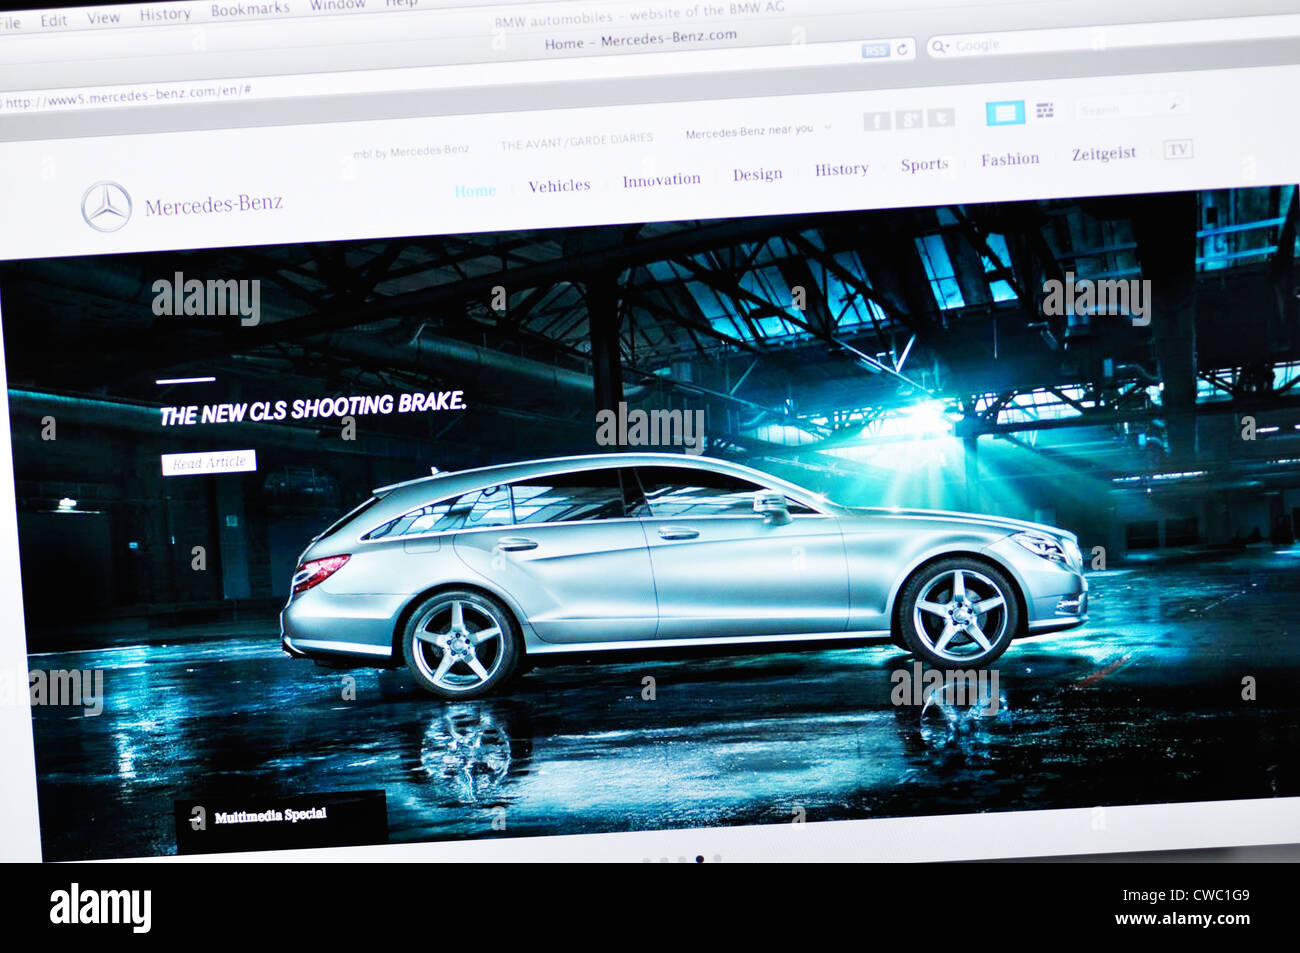 Mercedes Benz website - car manufacturer Stock Photo